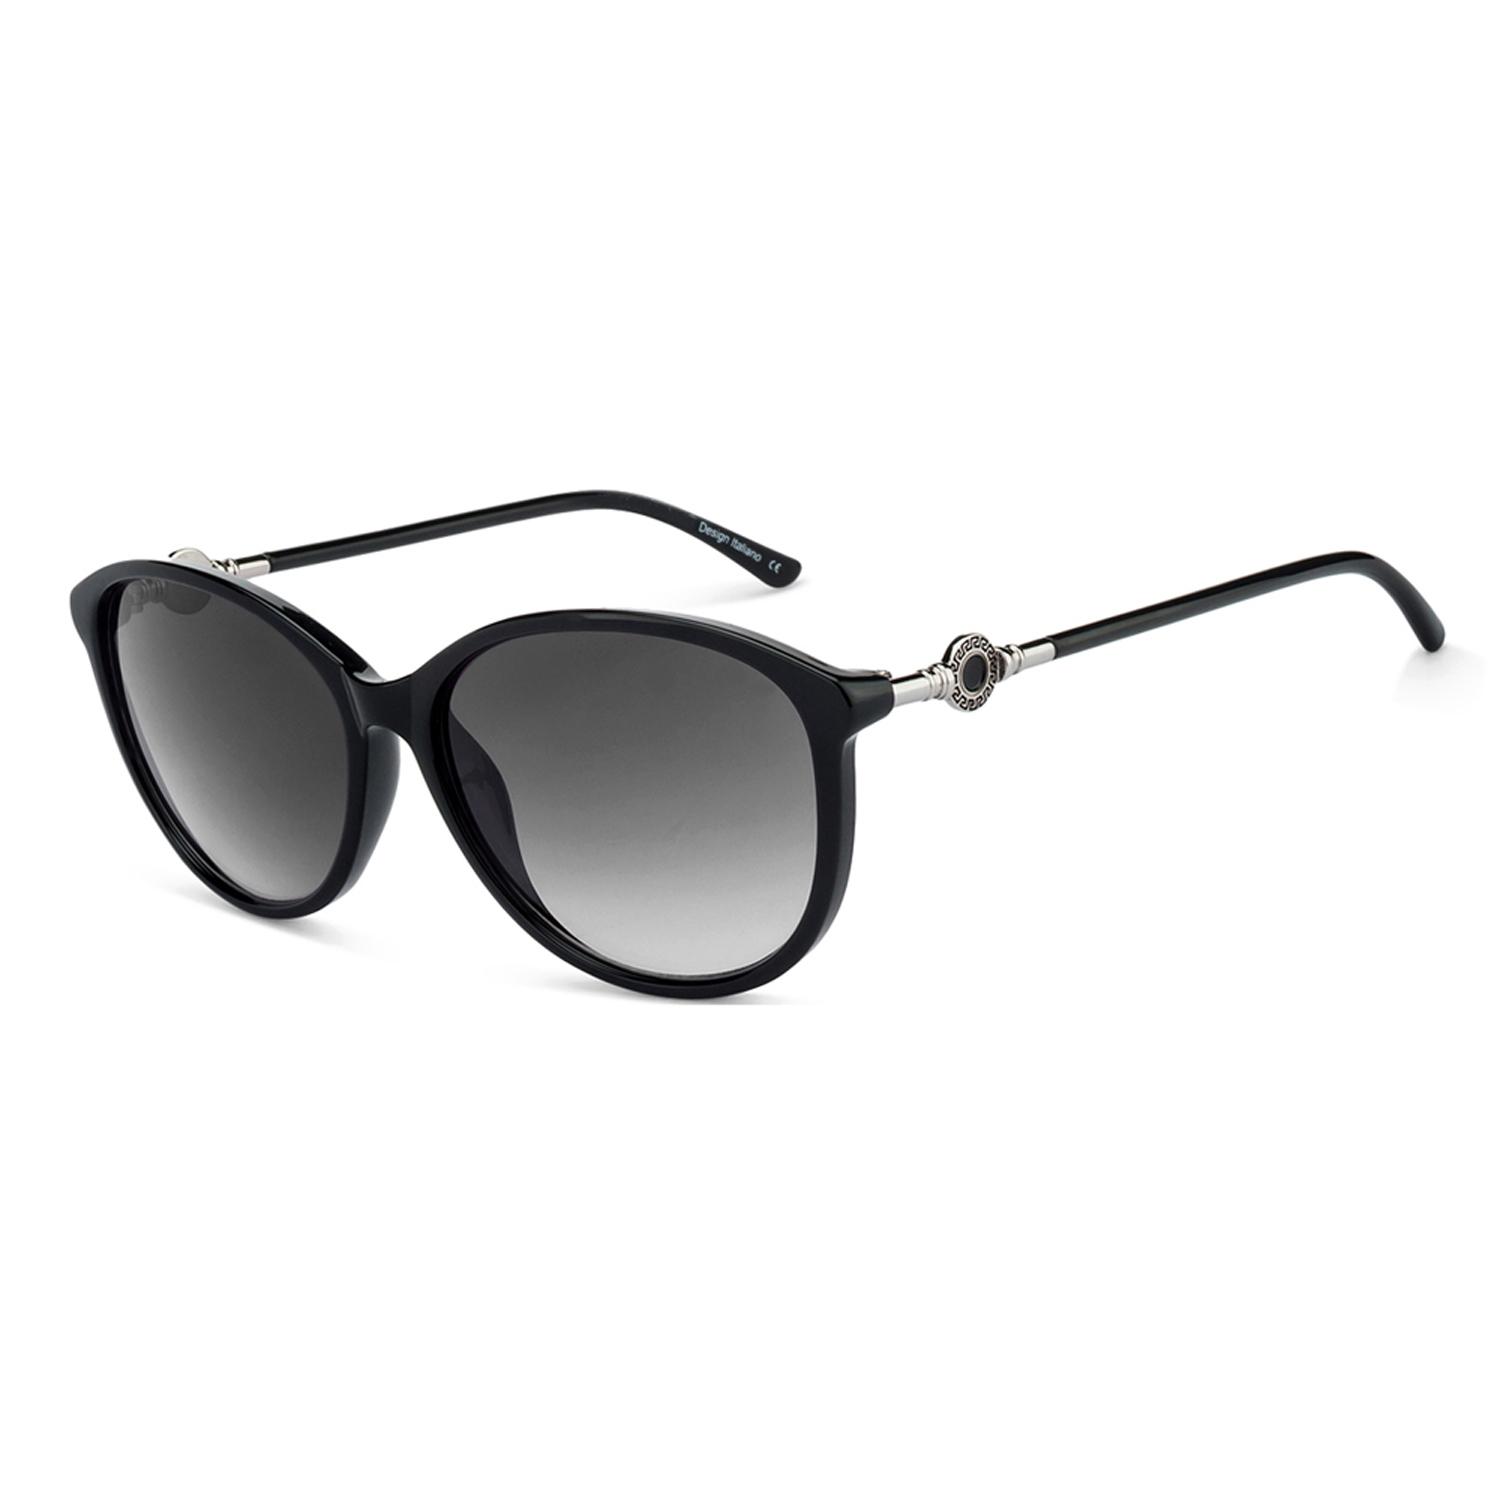 Women black classic round sunglasses 5910